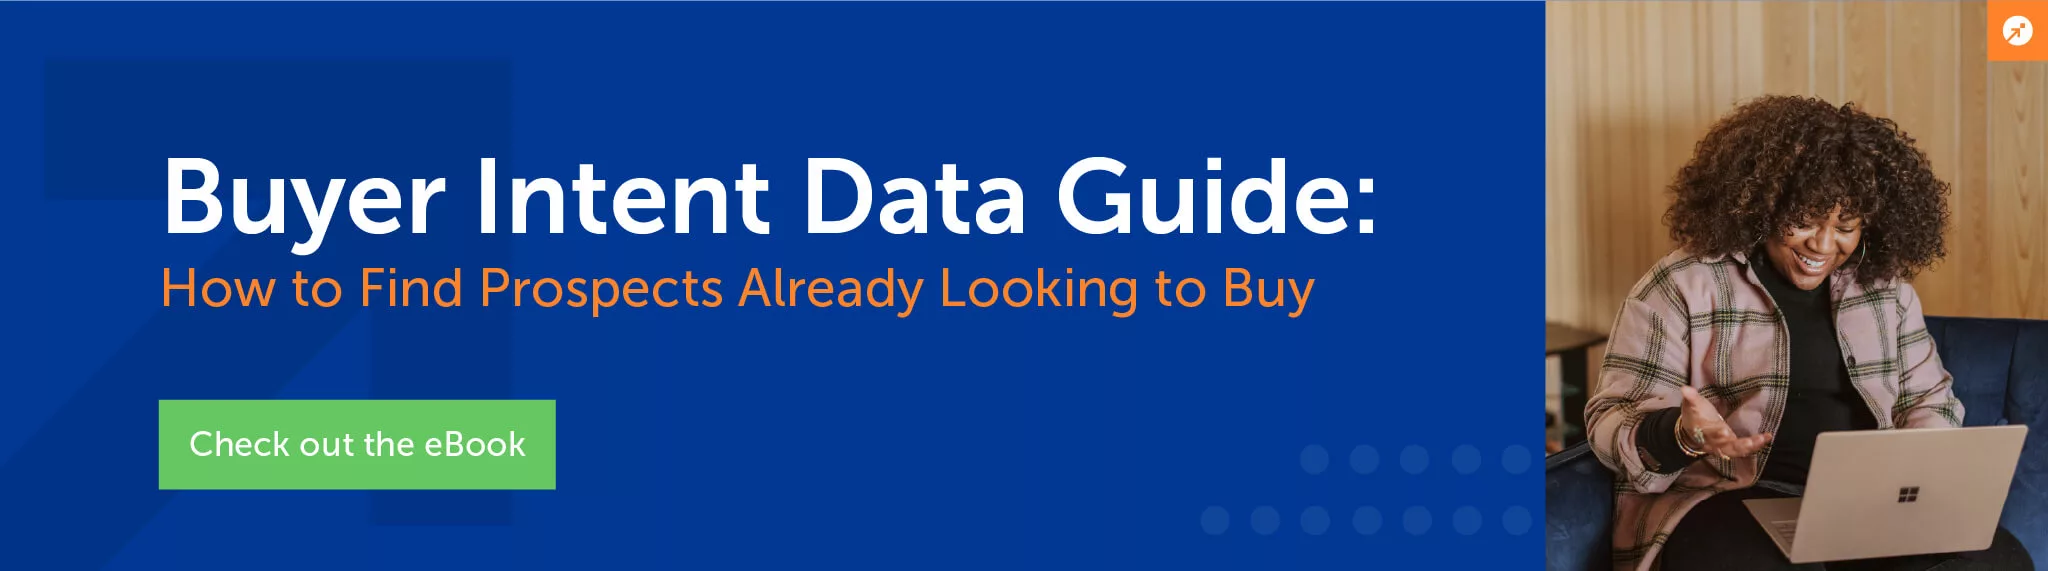 Buyer Intent Data Guide Ebook